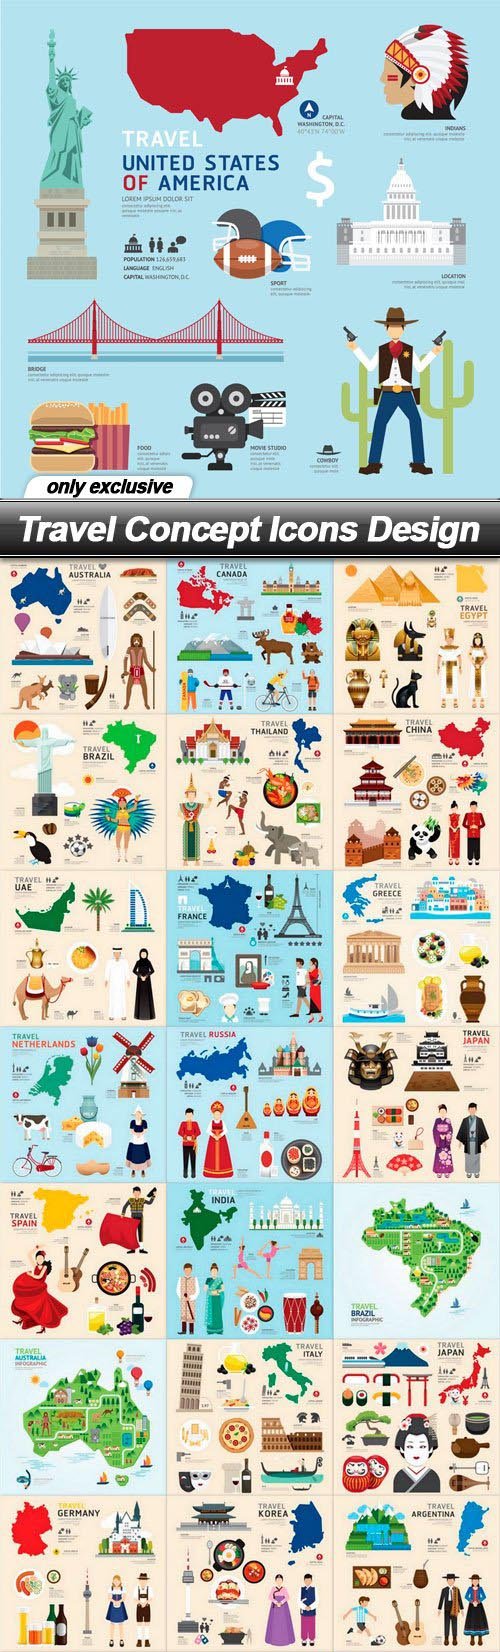 Travel Concept Icons Design - 25 EPS